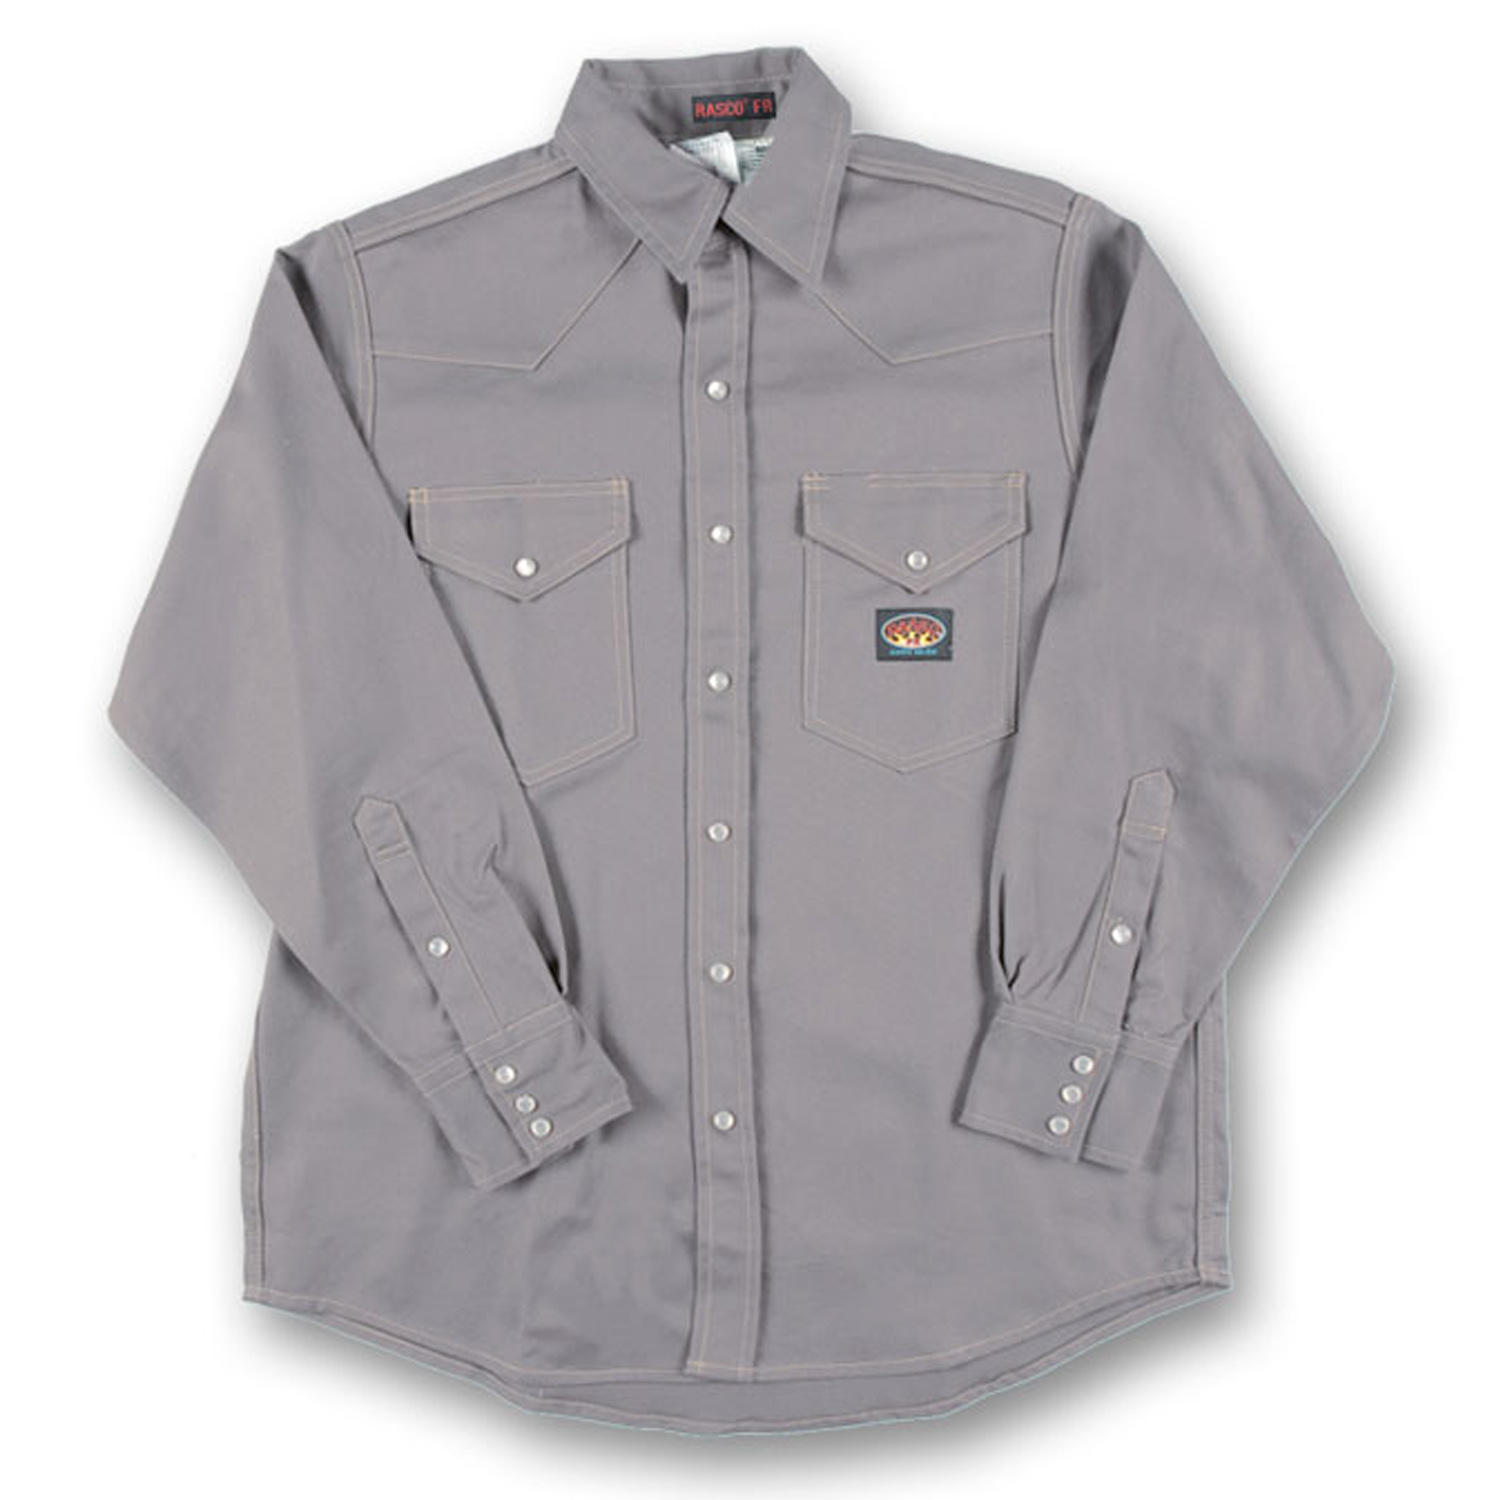 Rasco Gray FR Lightweight Work Shirt [Rasco]